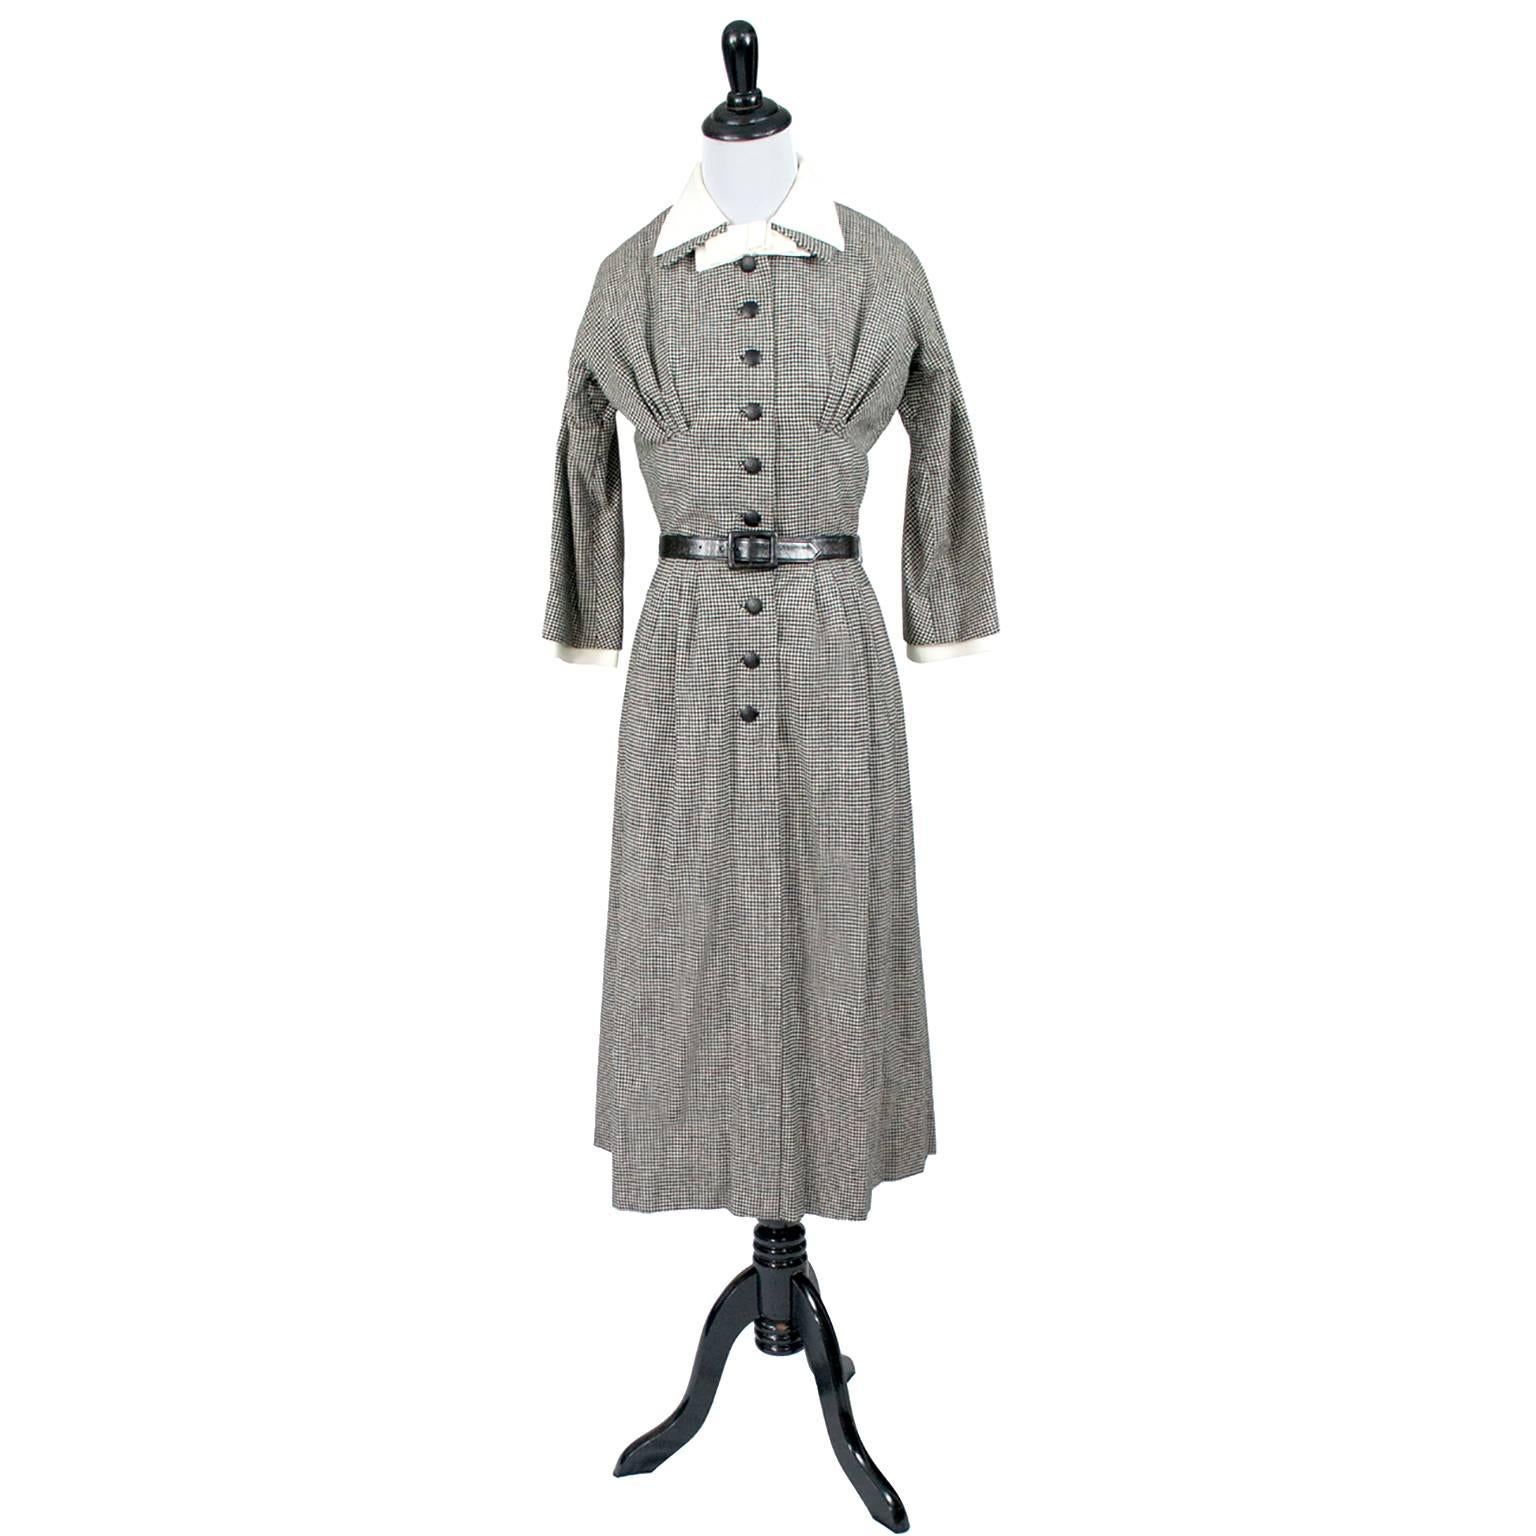 Gray Mollie Parnis VIntage Dress 1951 Documented Hapers Bazaar Black White Check